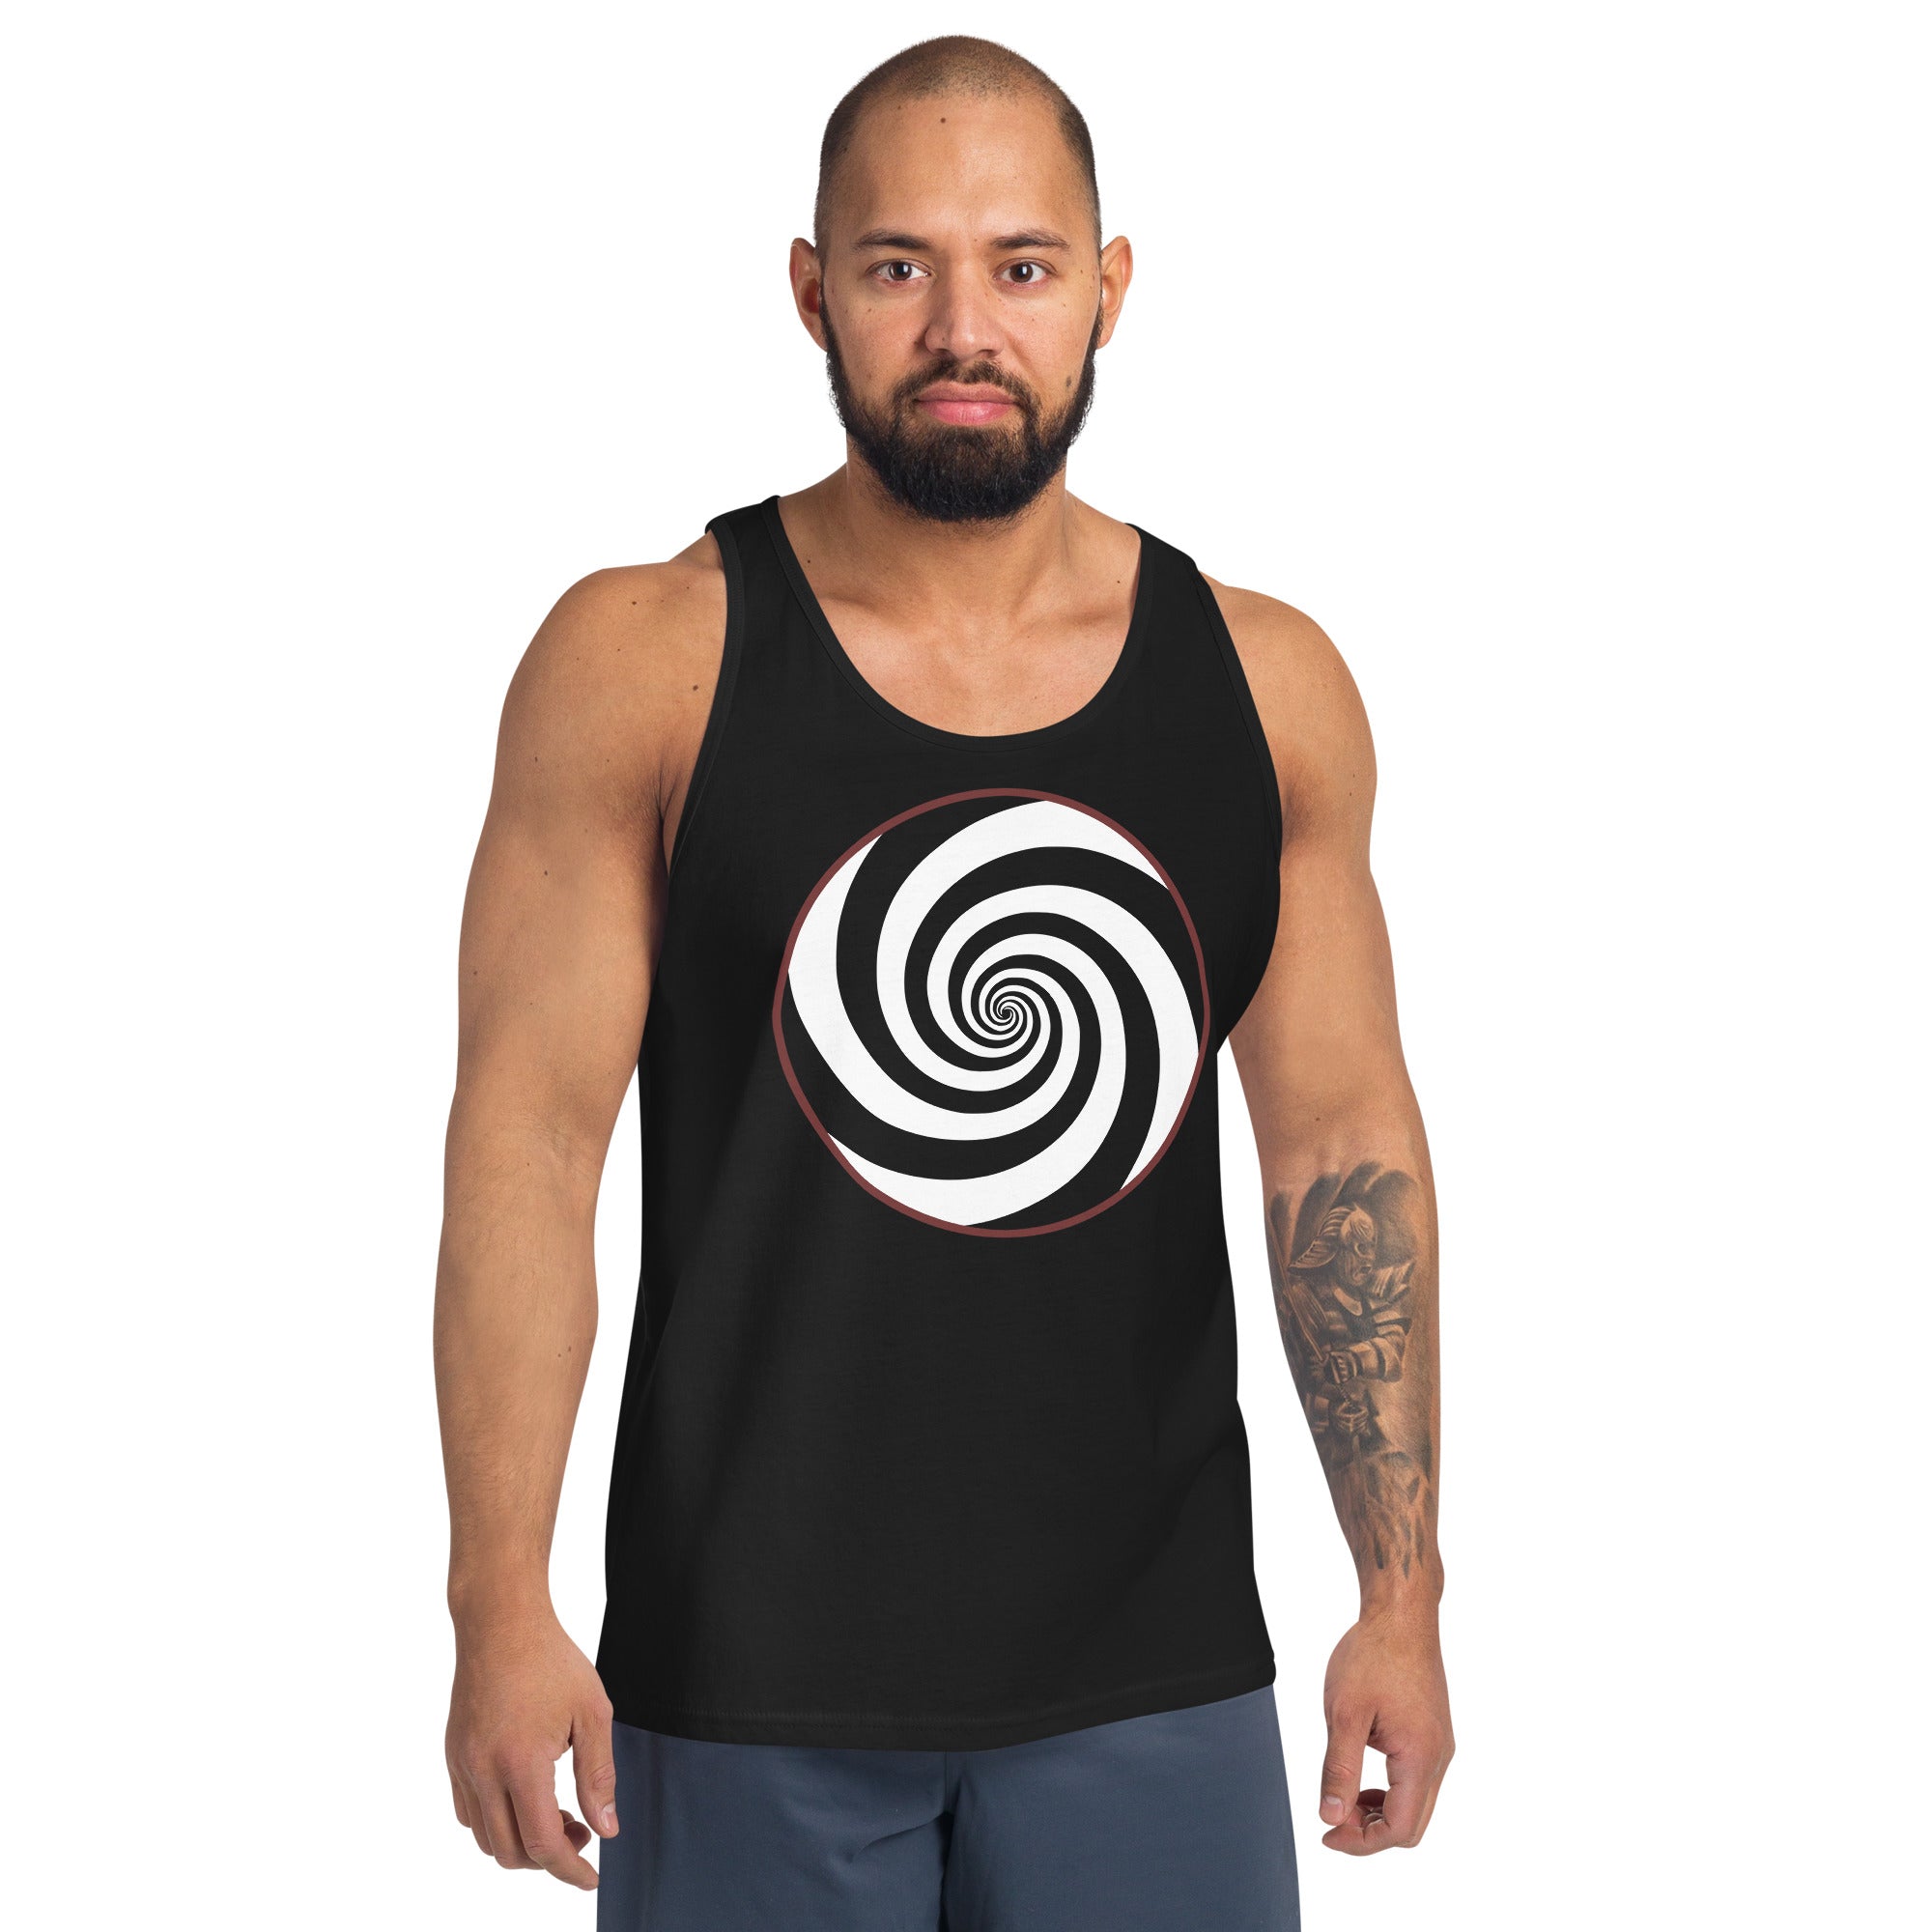 Hypnotic Hypnosis Spiral Swirl Illusion Twilight Zone Men's Tank Top Shirt